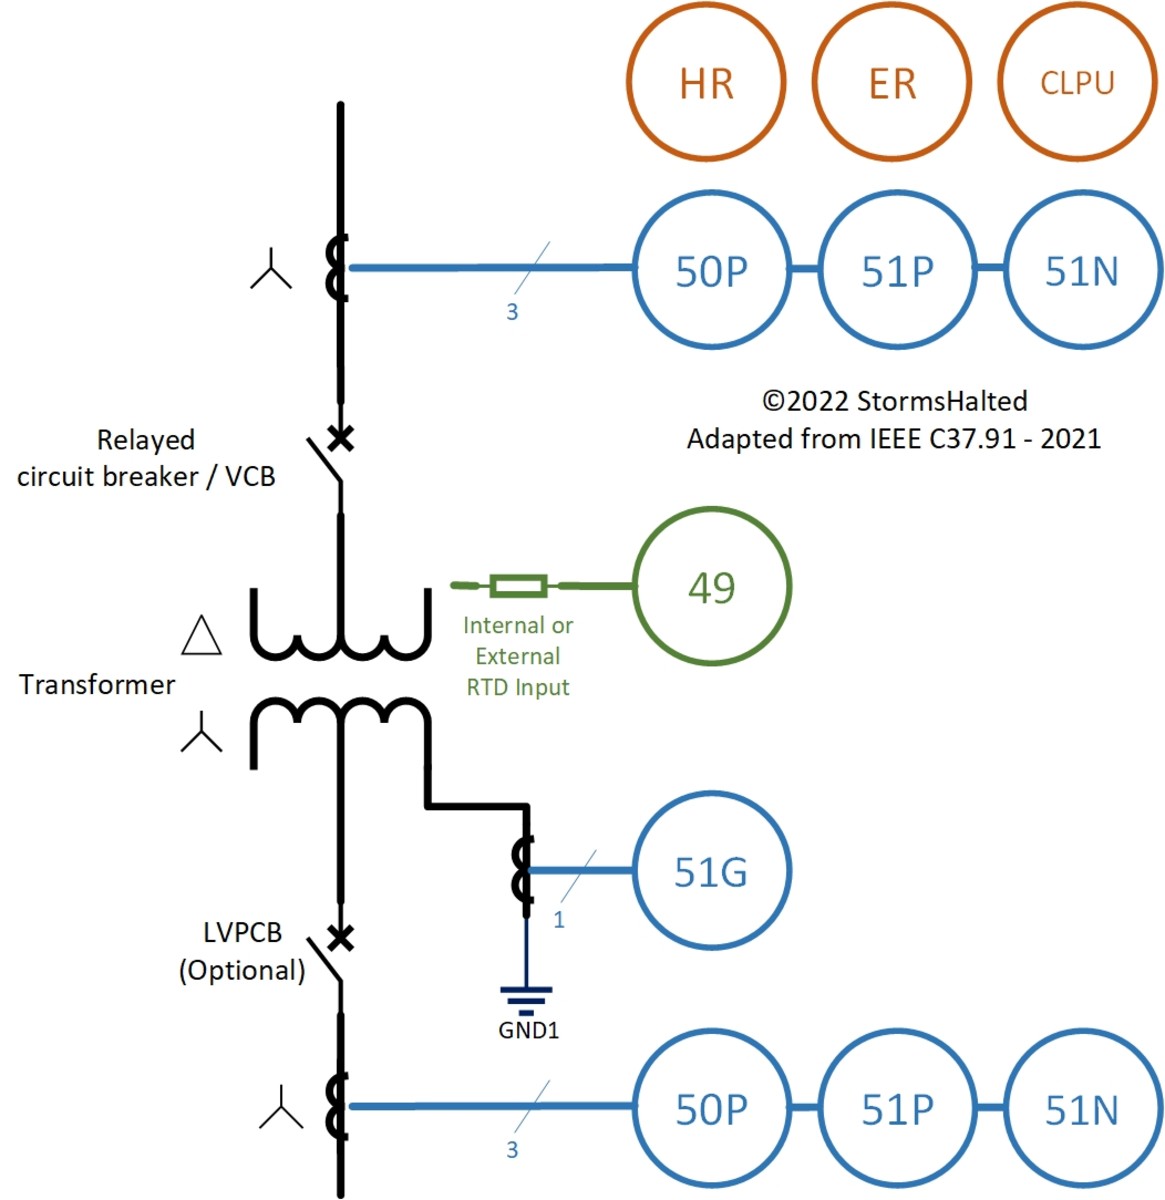 Medium-voltage transformers: fundamentals of medium-voltage